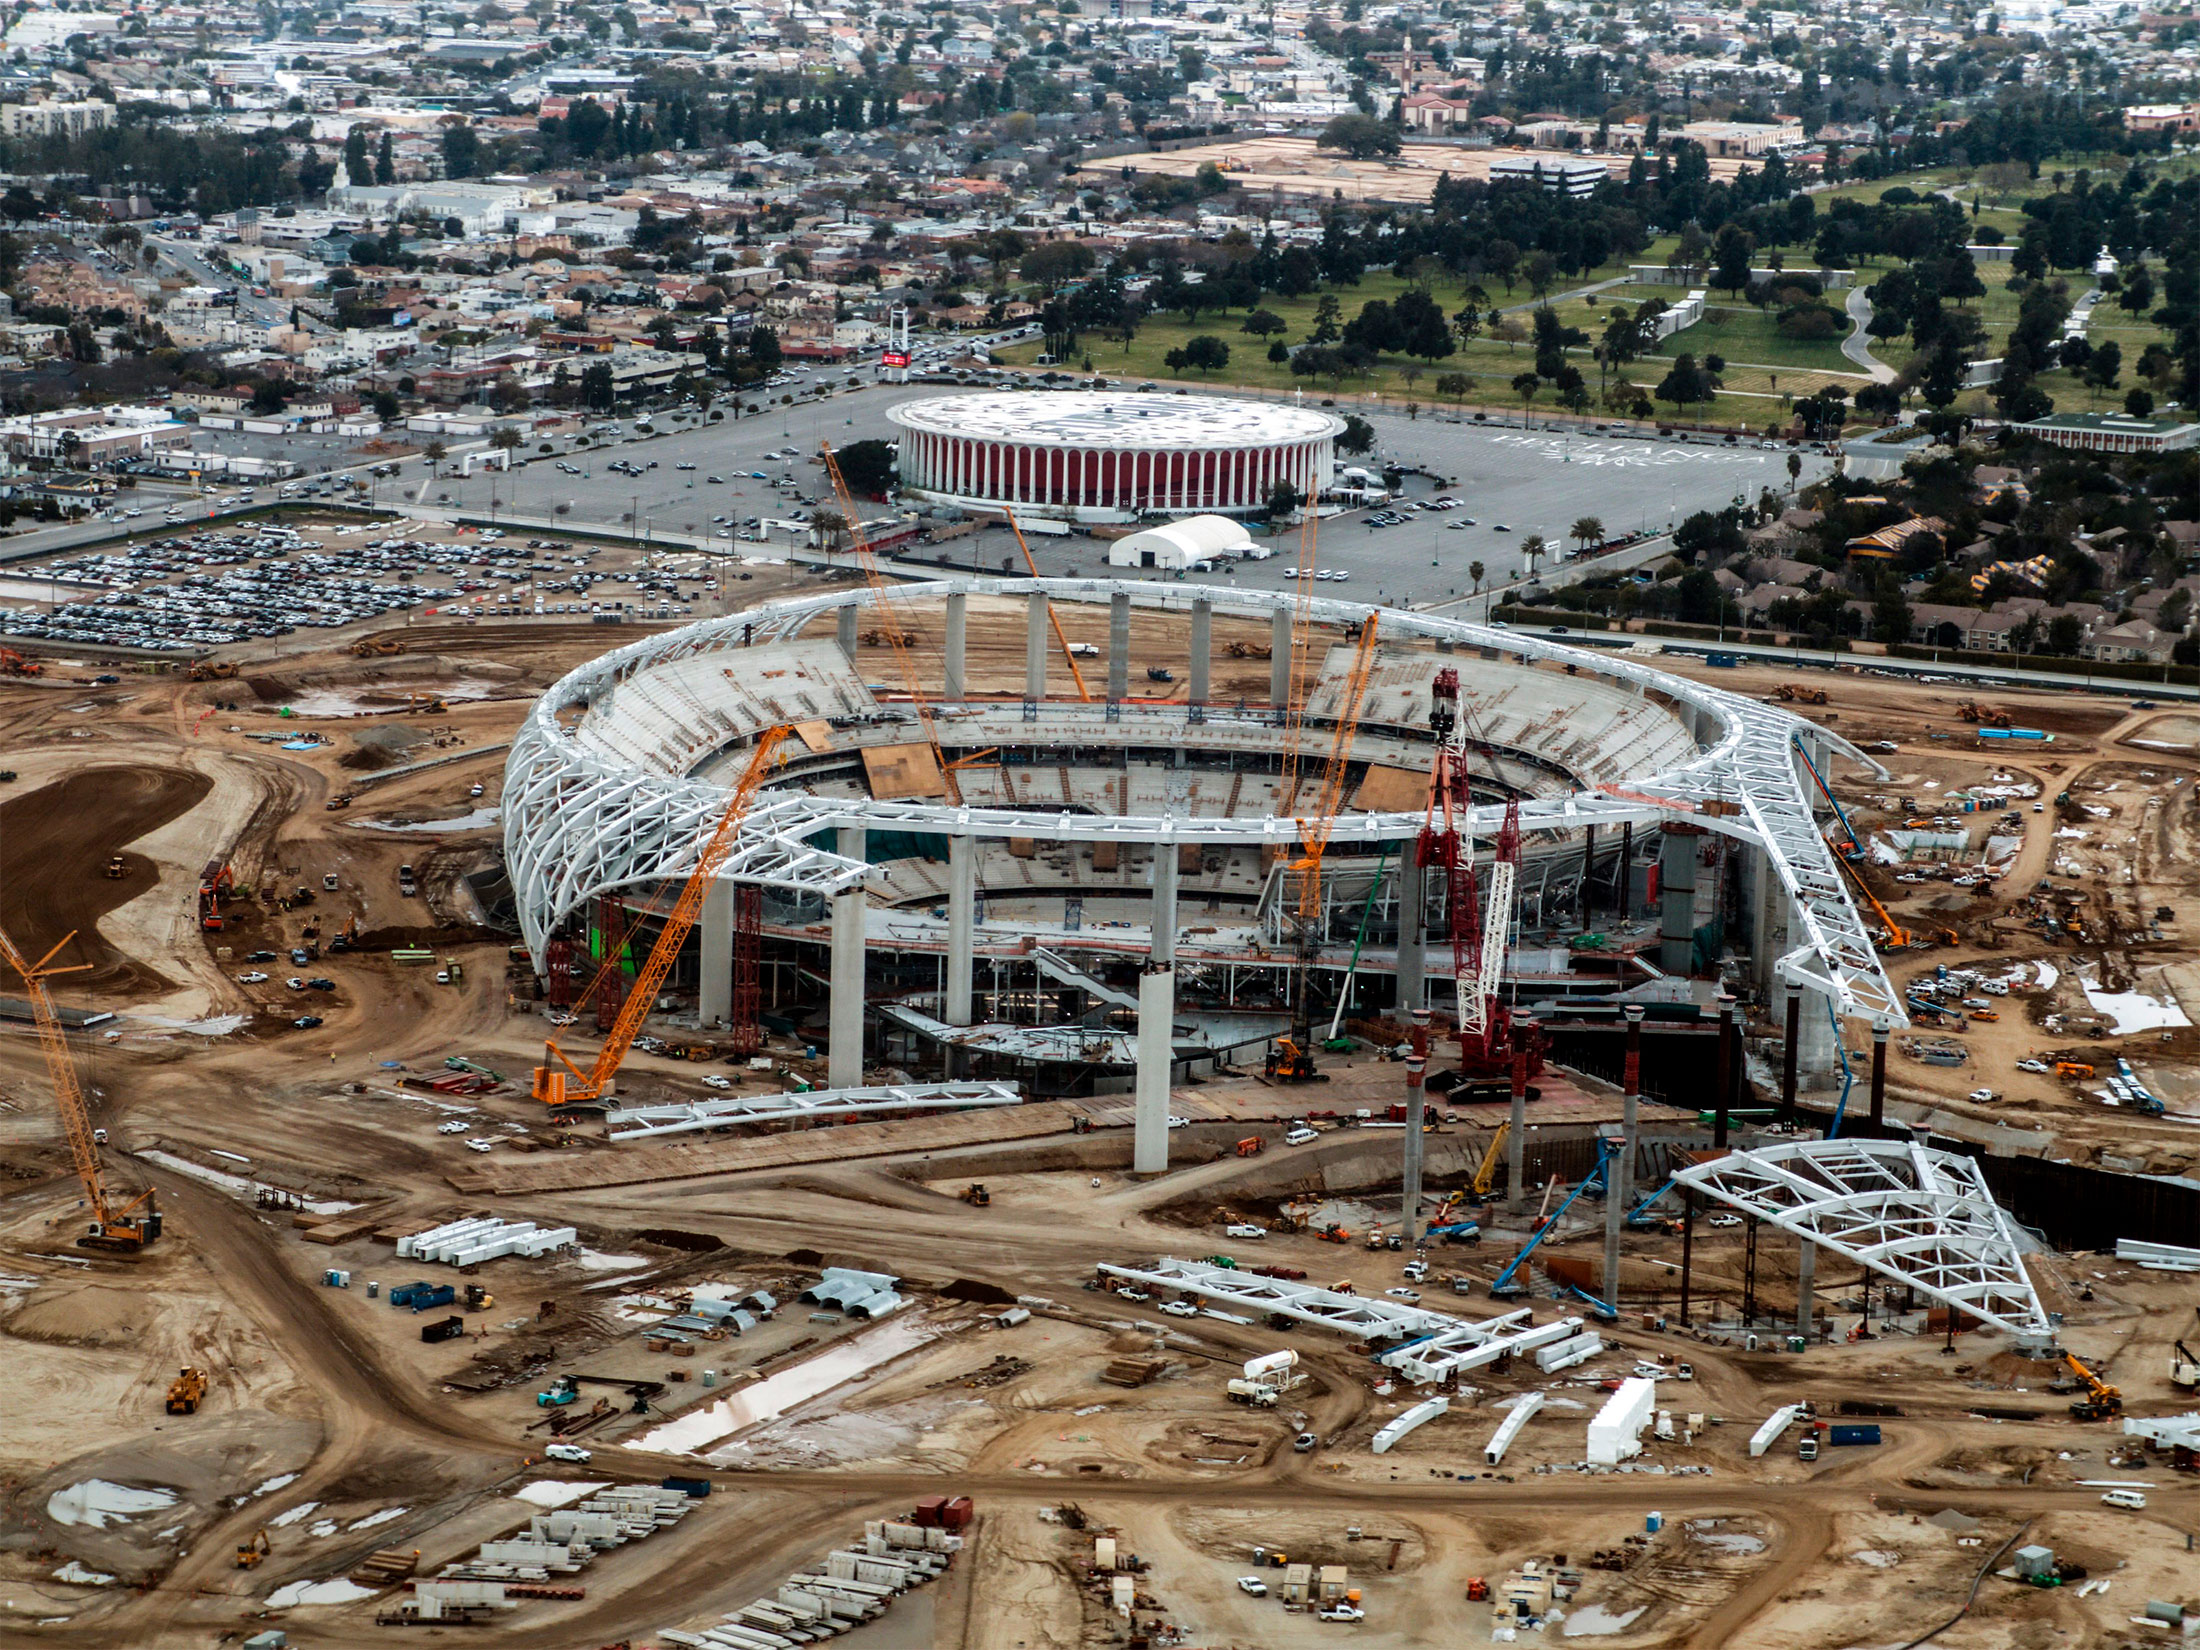 SoFi Close to Putting Its Name on LA Football Stadium - Bloomberg